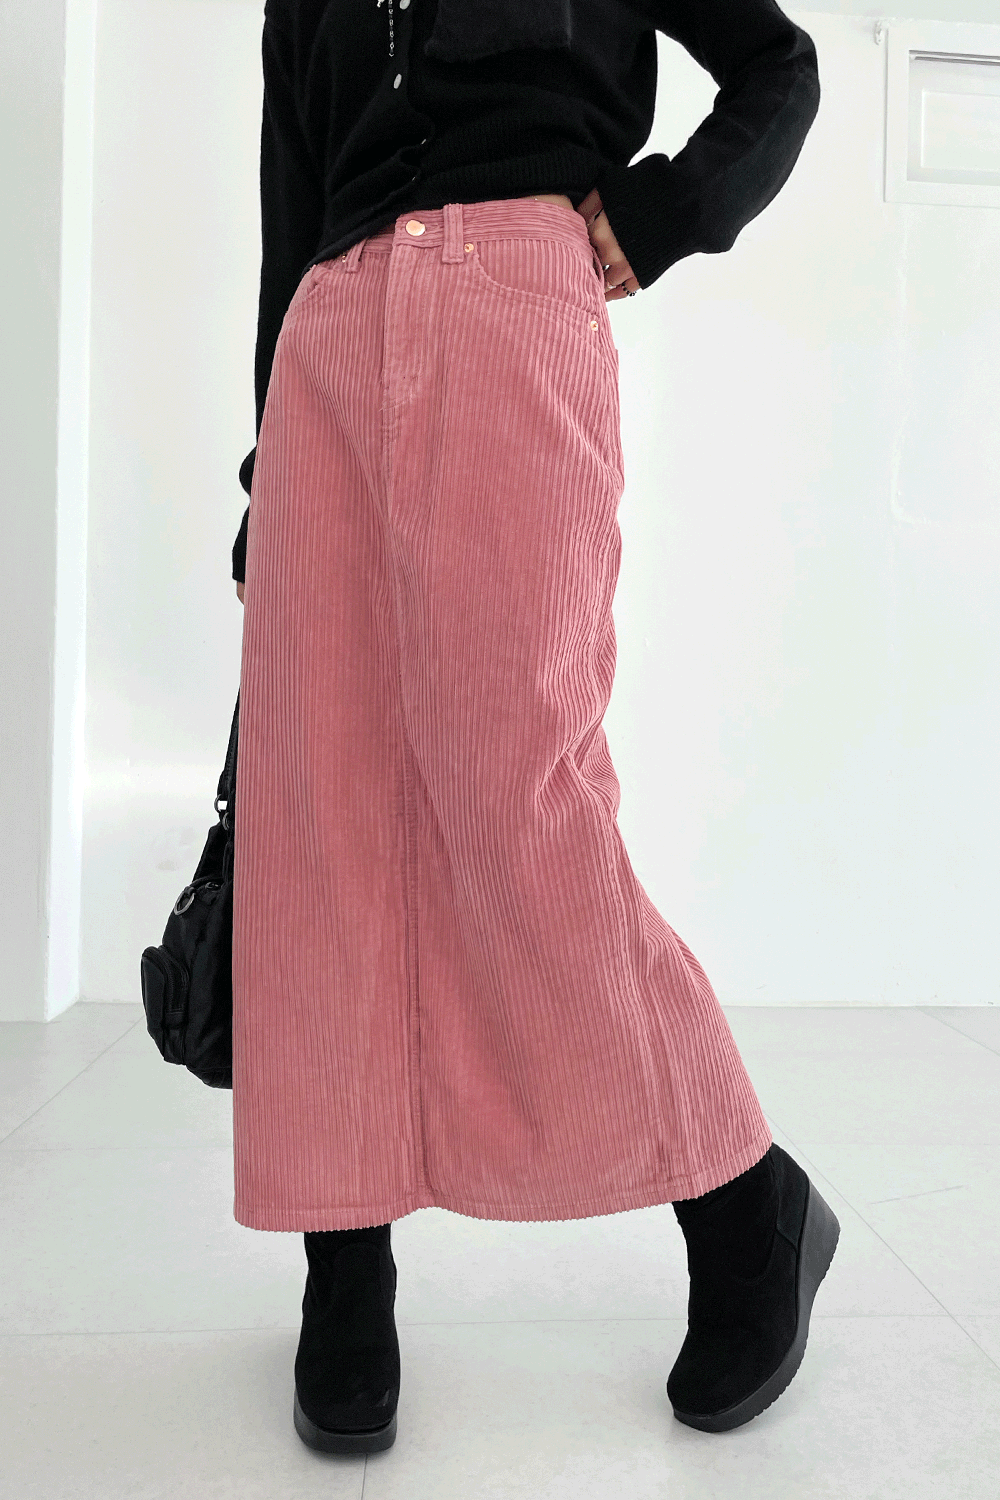 vivid corduroy skirts (pink)